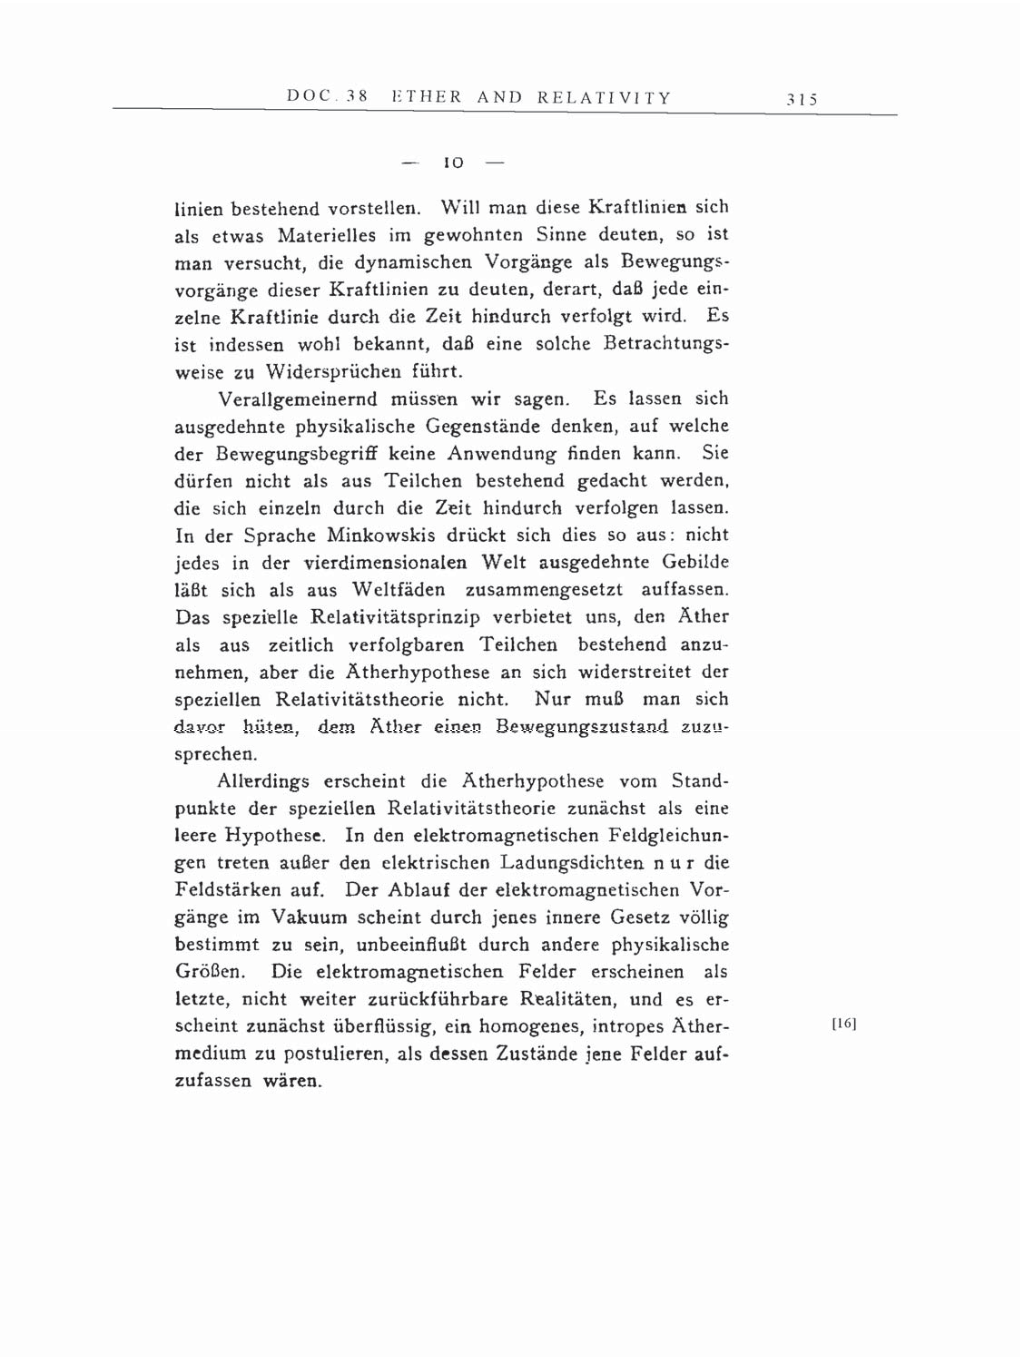 Volume 7: The Berlin Years: Writings, 1918-1921 page 315